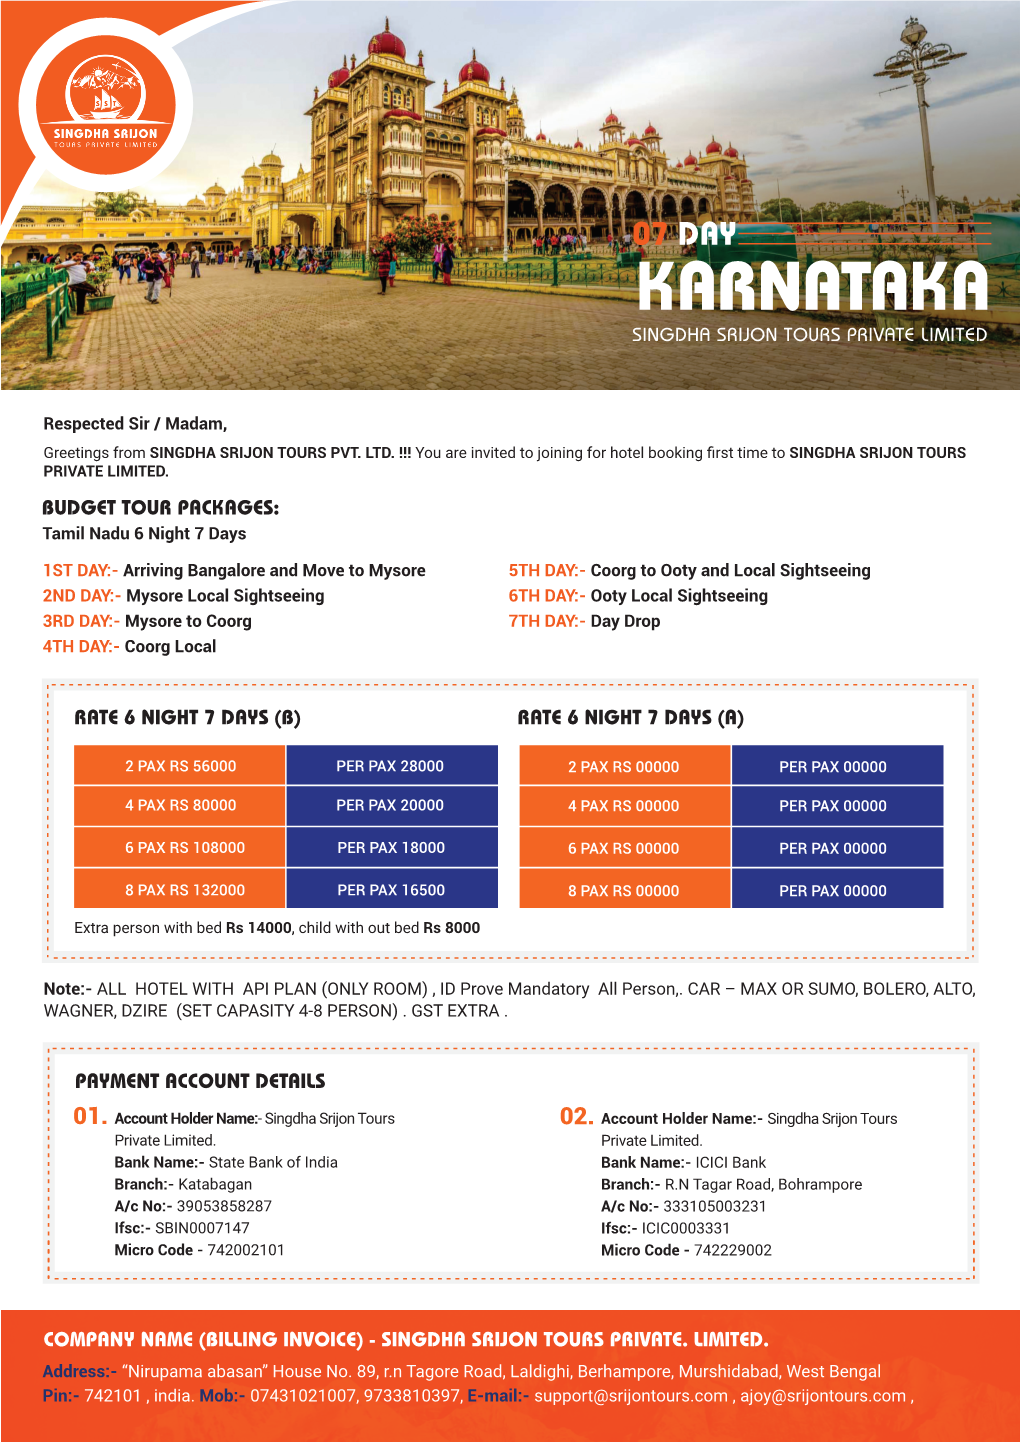 Karnataka Singdha Srijon Tours Private Limited